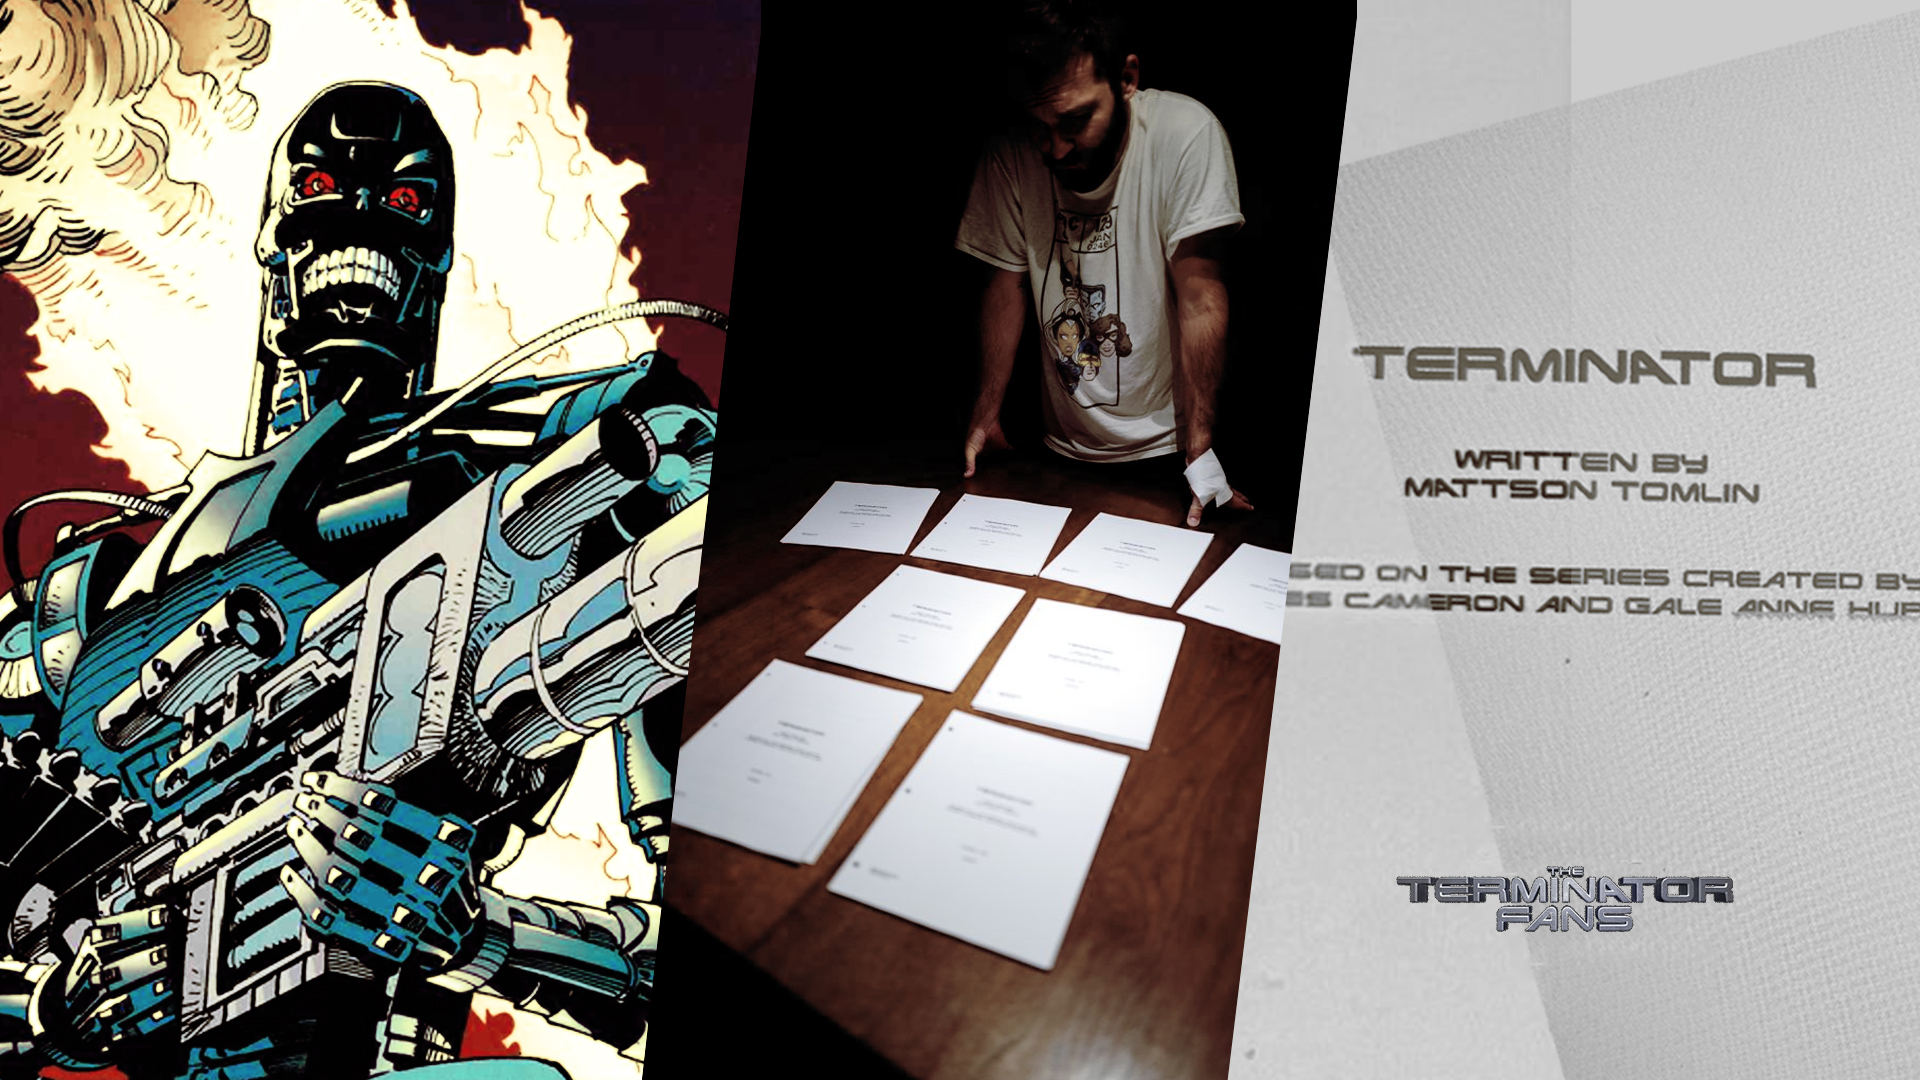 What do you think? #terminatoranime #terminator #netflixseries | TikTok